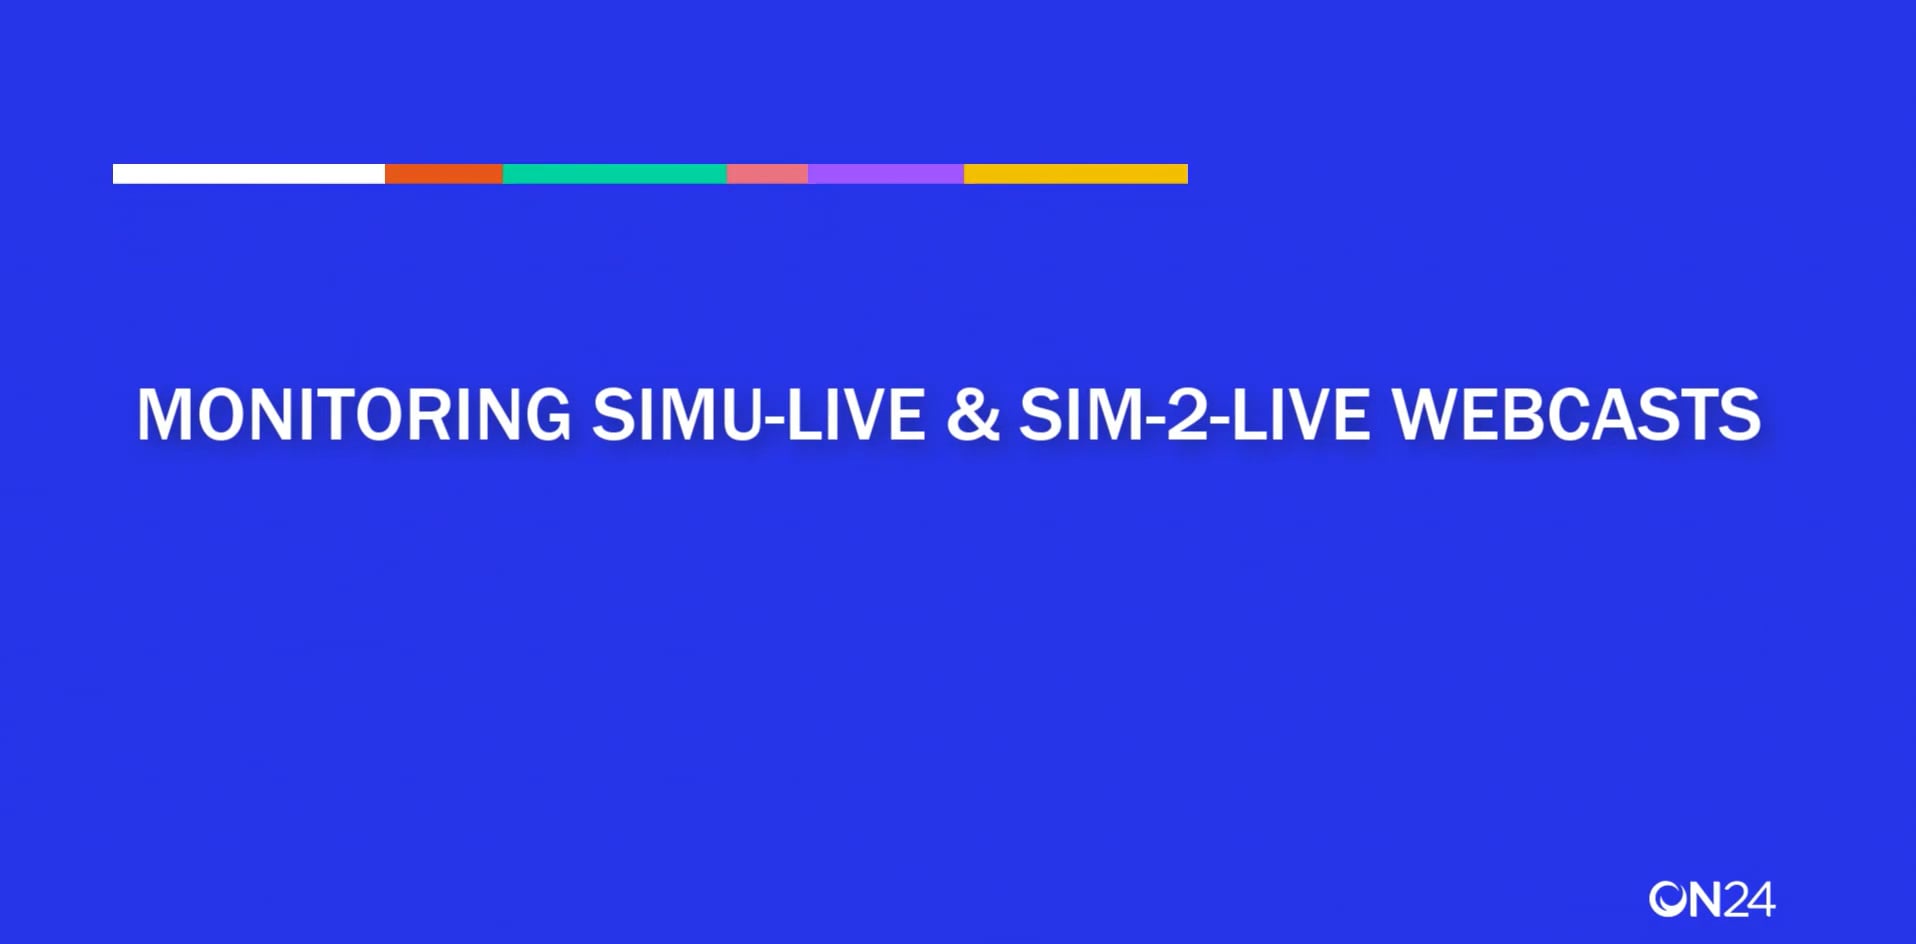 Monitoring Simu-live and Sim-2-Live Webcasts on Vimeo